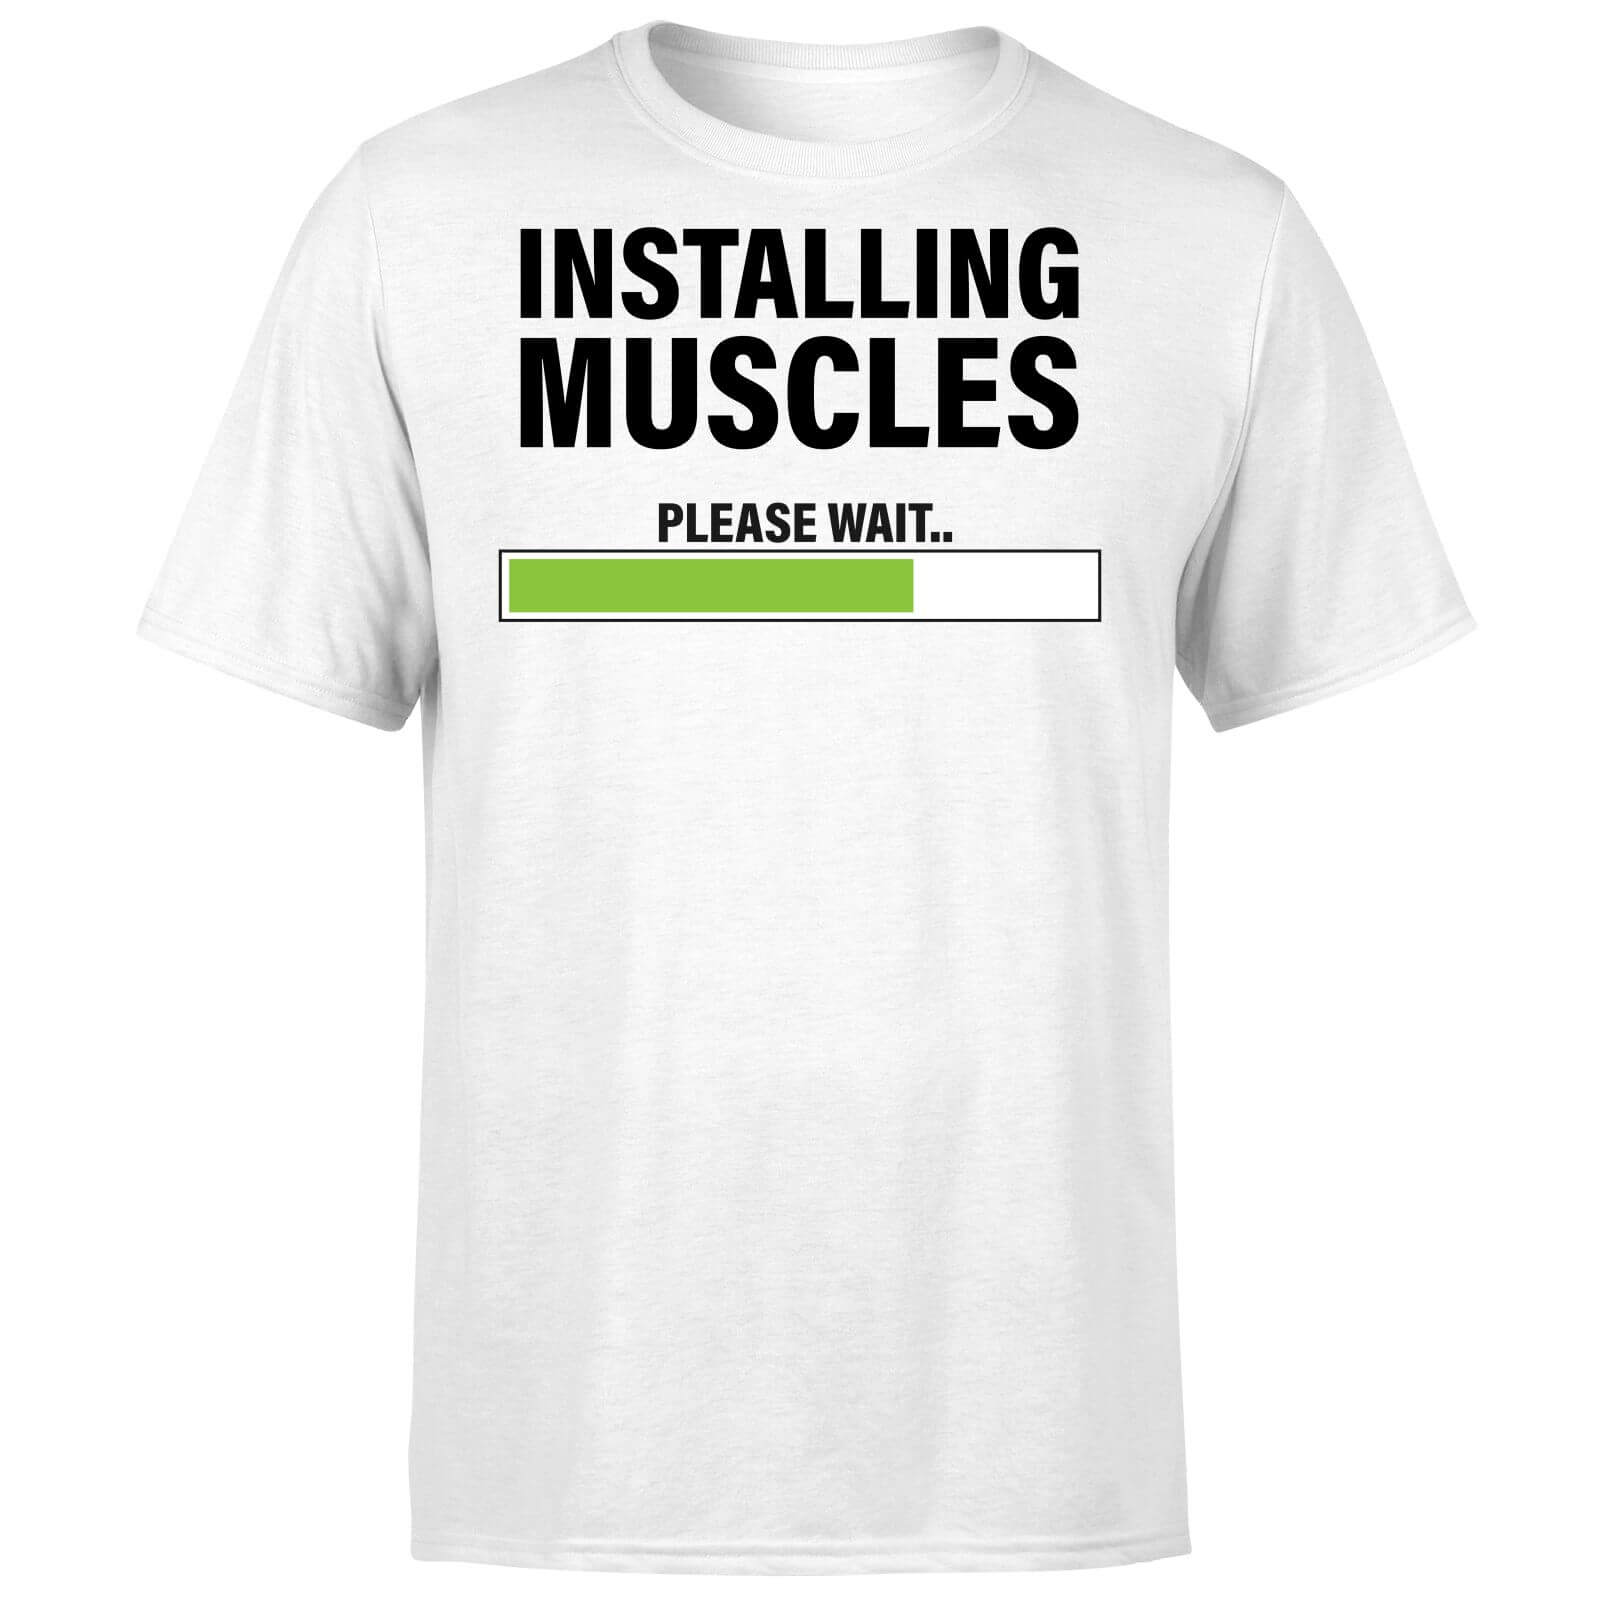 Installing Muscles T-Shirt - White - S - White